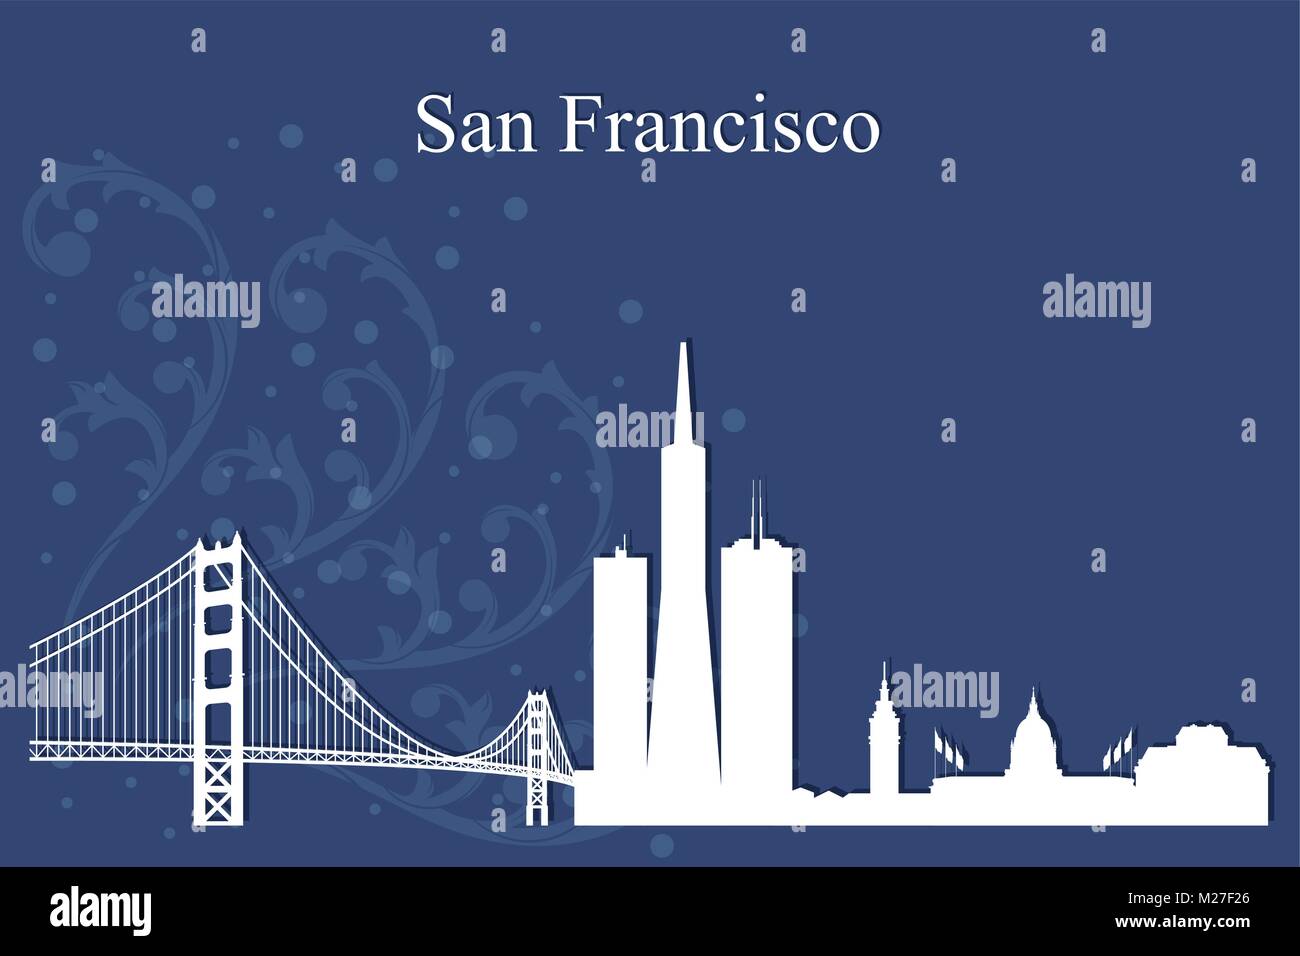 San Francisco city skyline silhouette on blue background, vector illustration Stock Vector